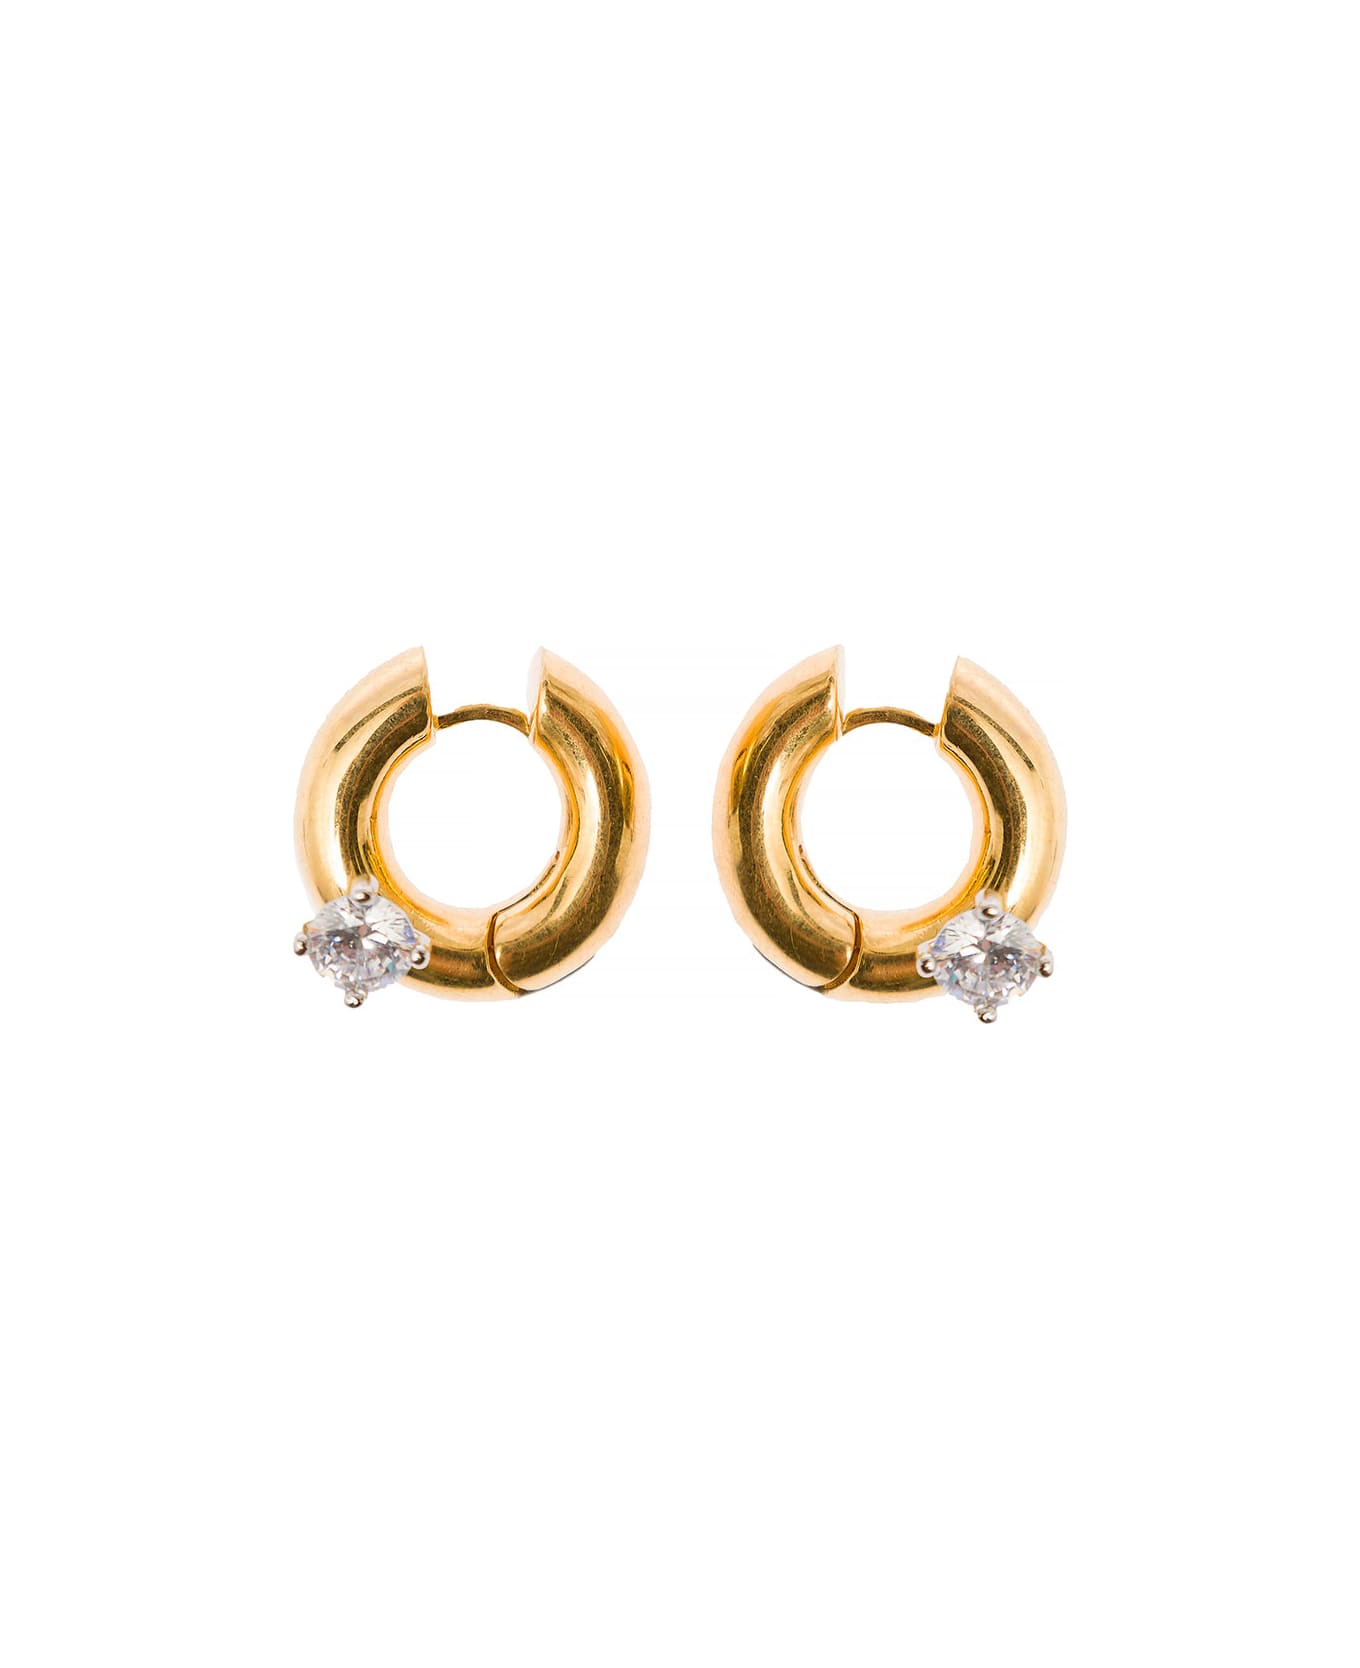 Panconesi Gold Tone Hoops Earrings With Zircons In Gold Plated Brass Woman - Metallic